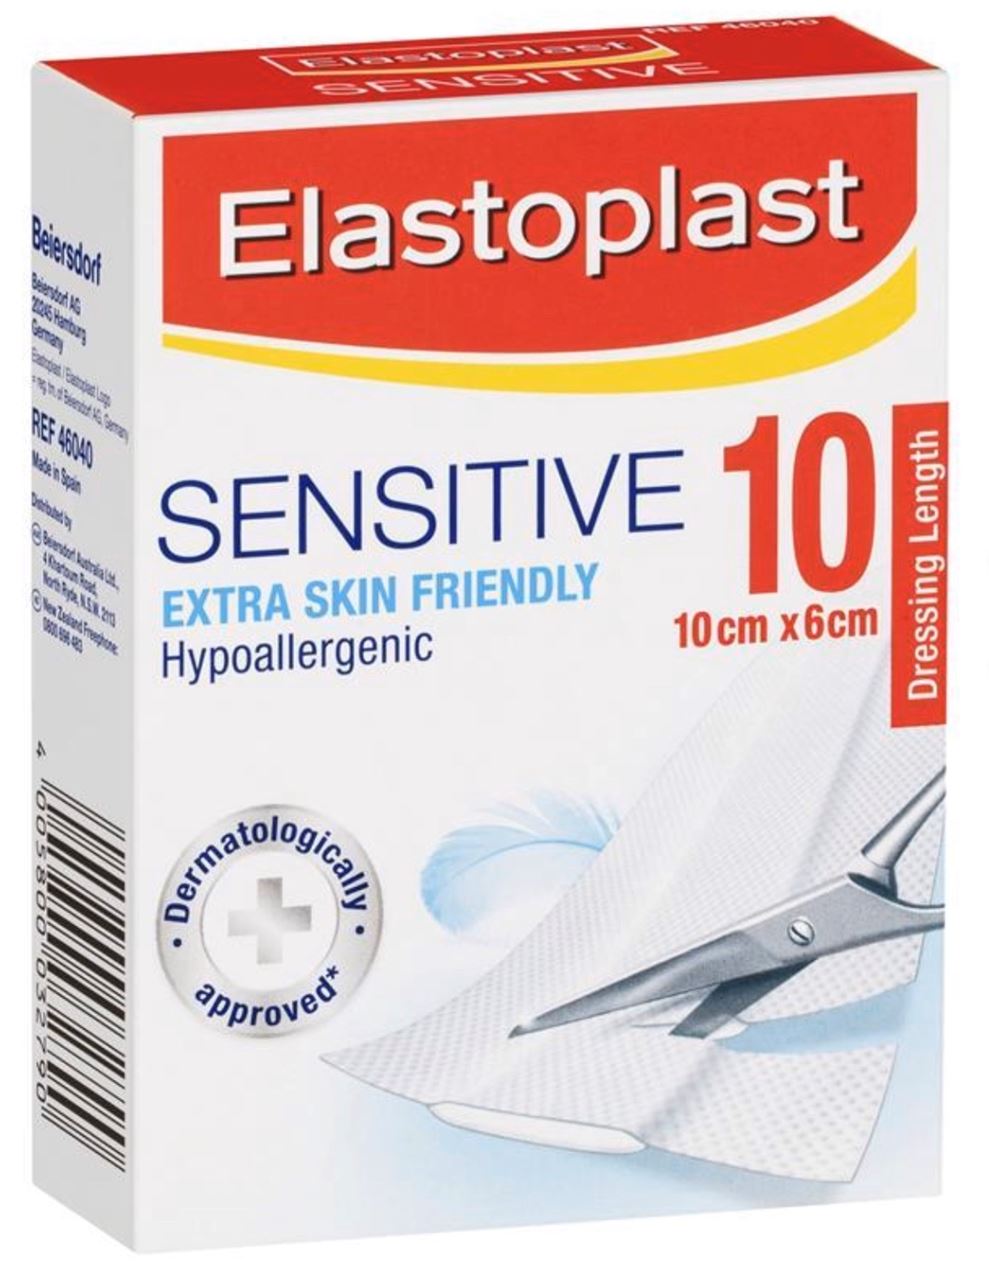 Elastoplast Sensitive Dressing Lengths 10 (10cm x 6cm)